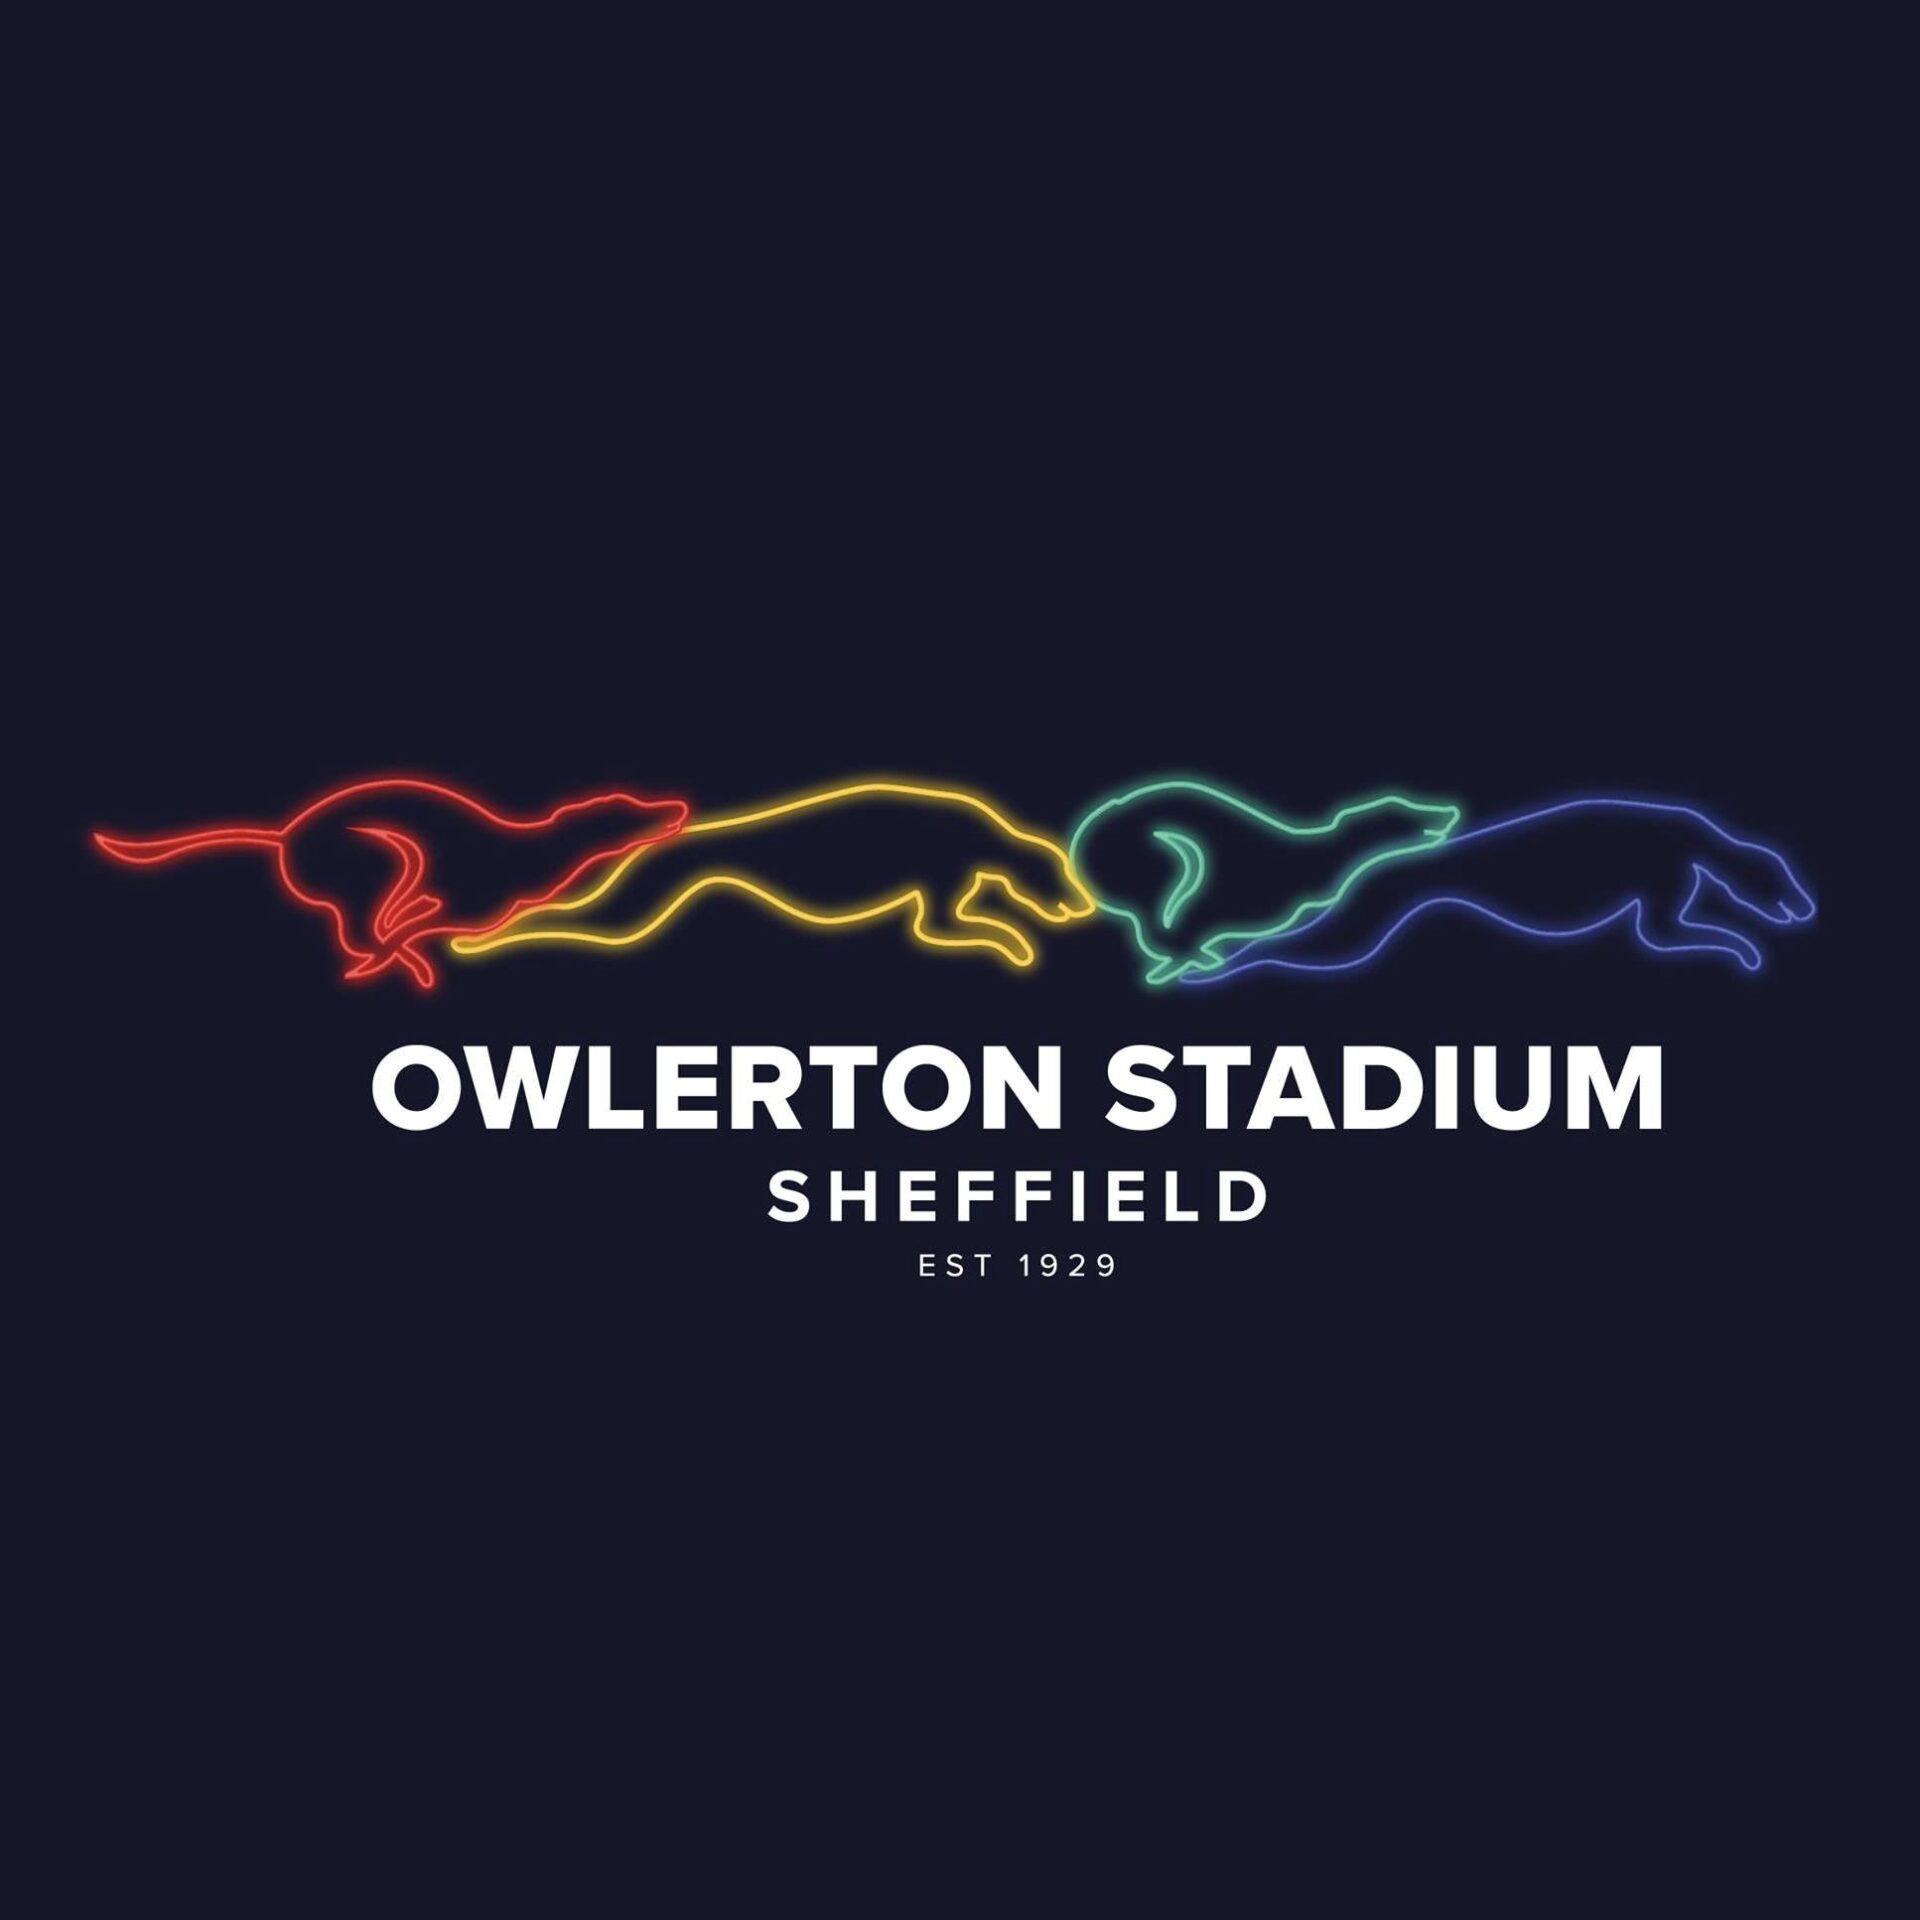 Sheffield Sports Stadium